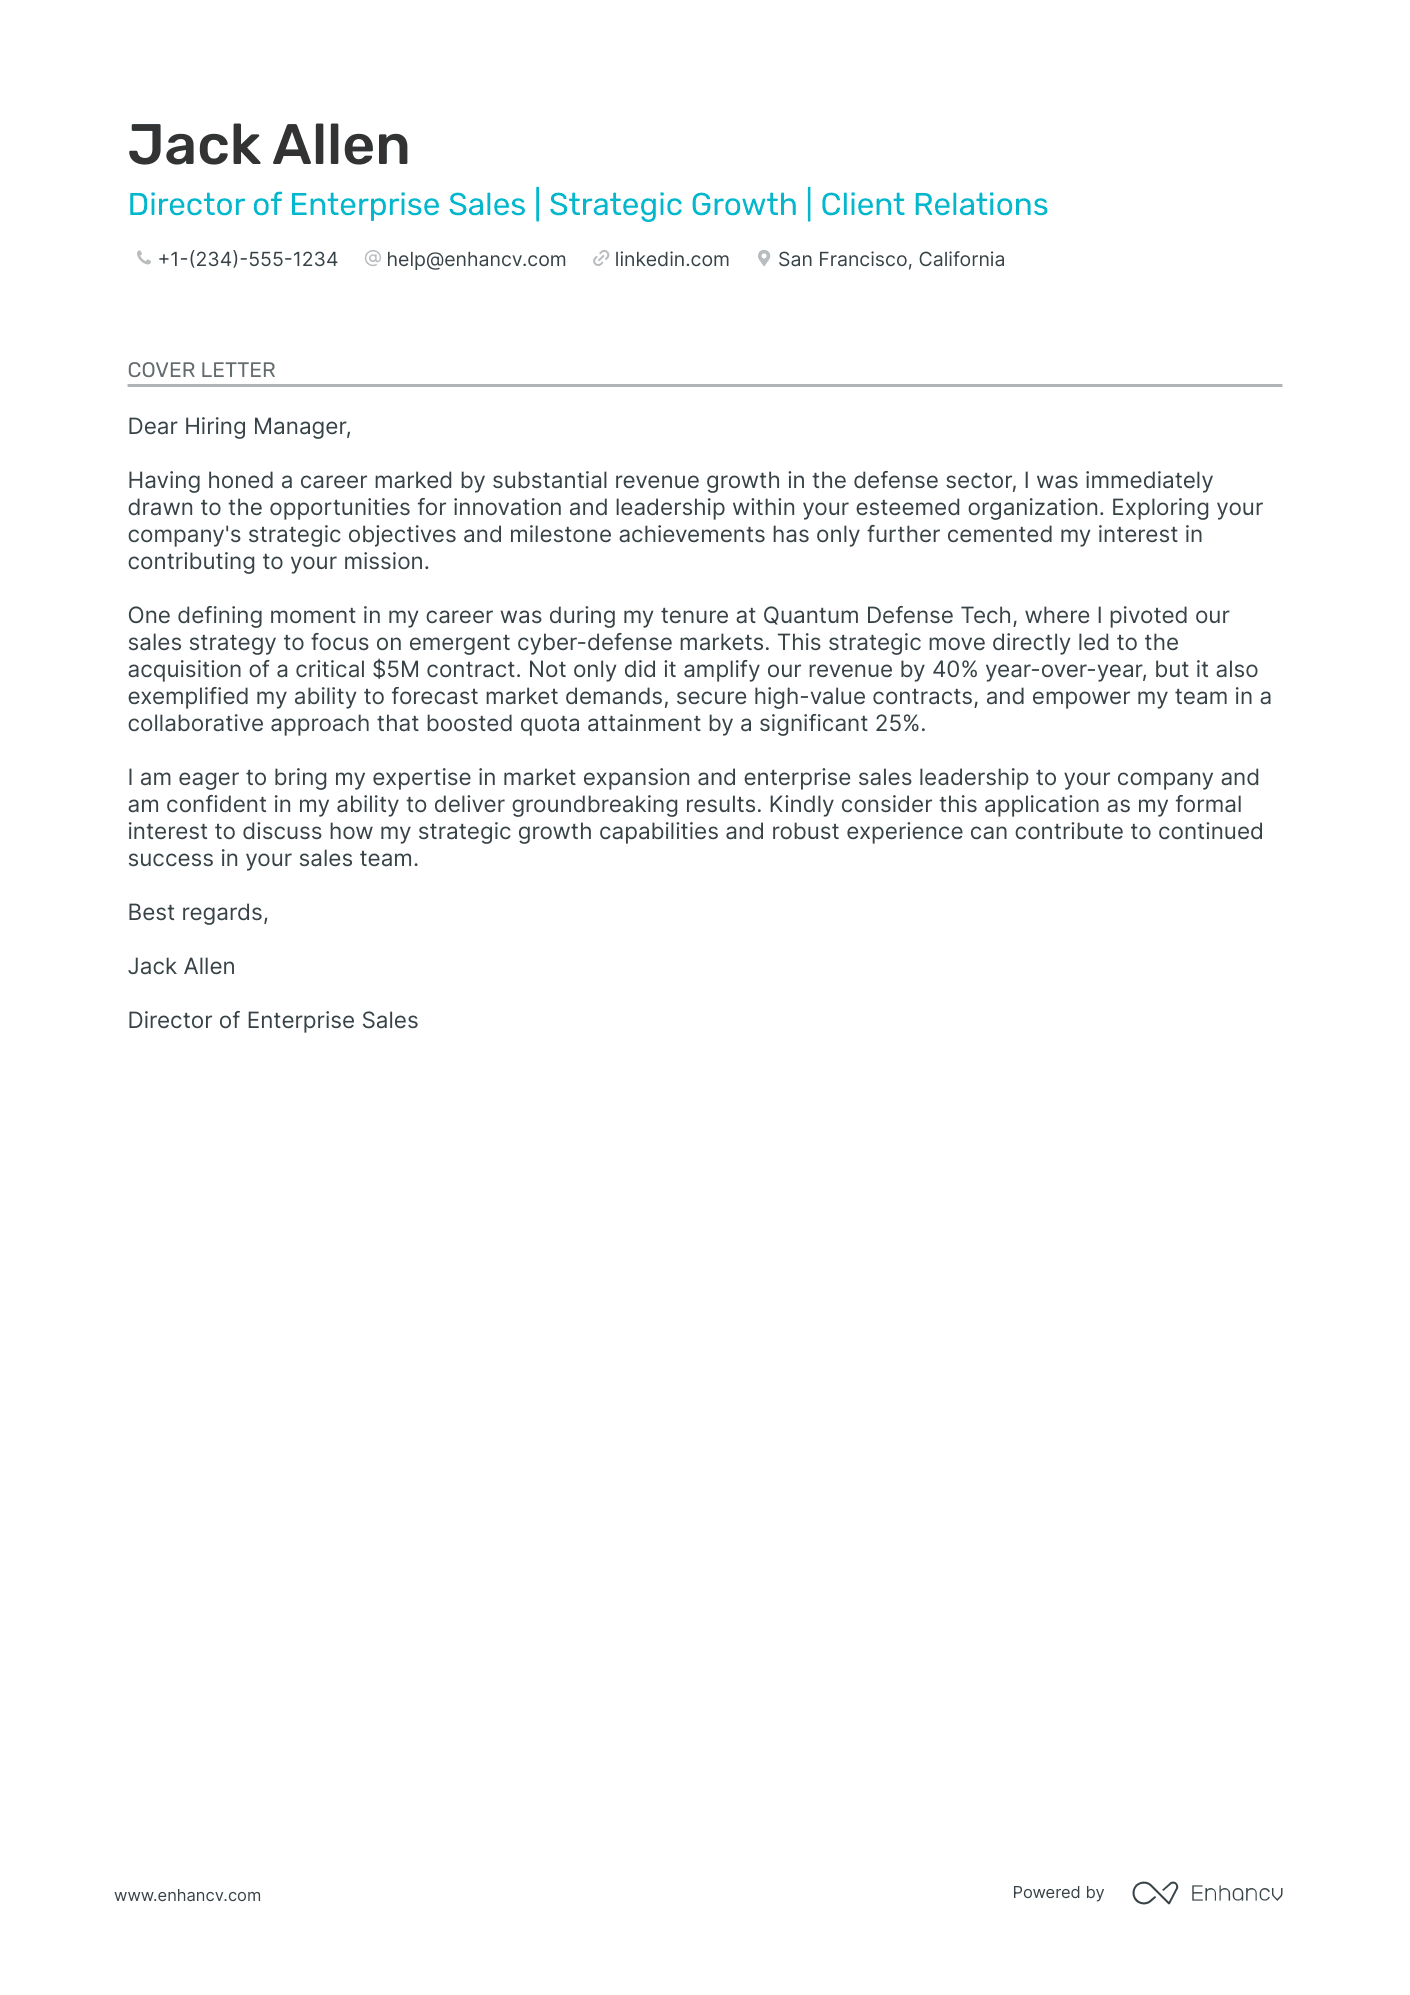 application letter for salesman position